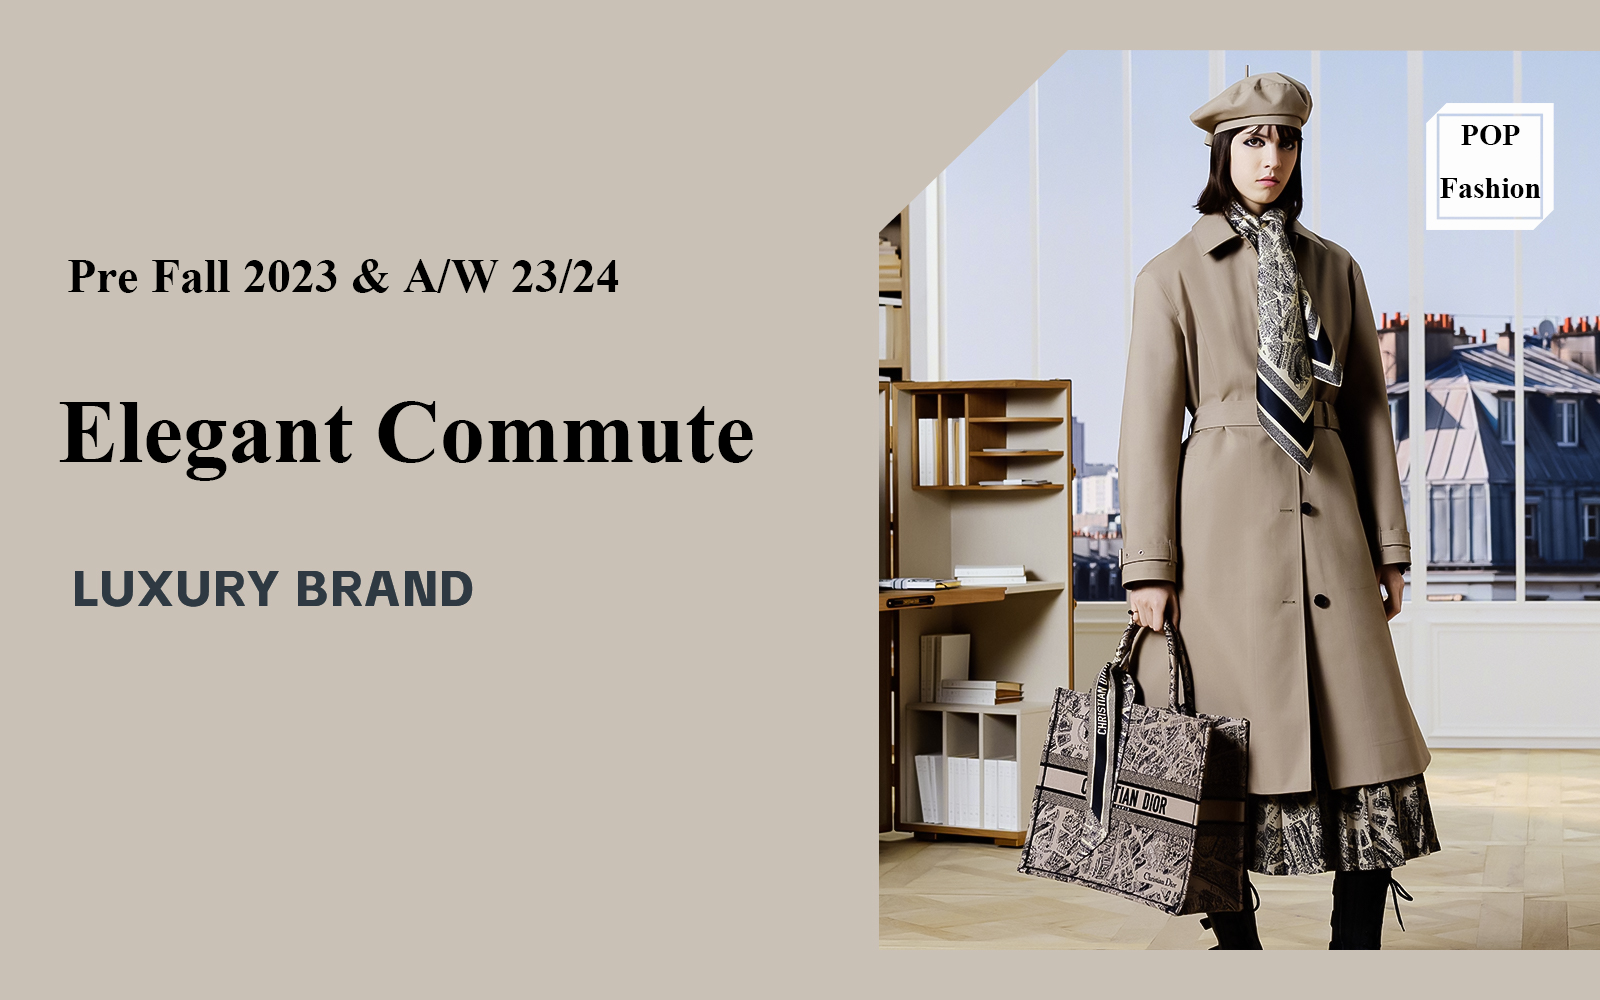 Elegant Commute -- The Comprehensive Analysis of Luxury Brand